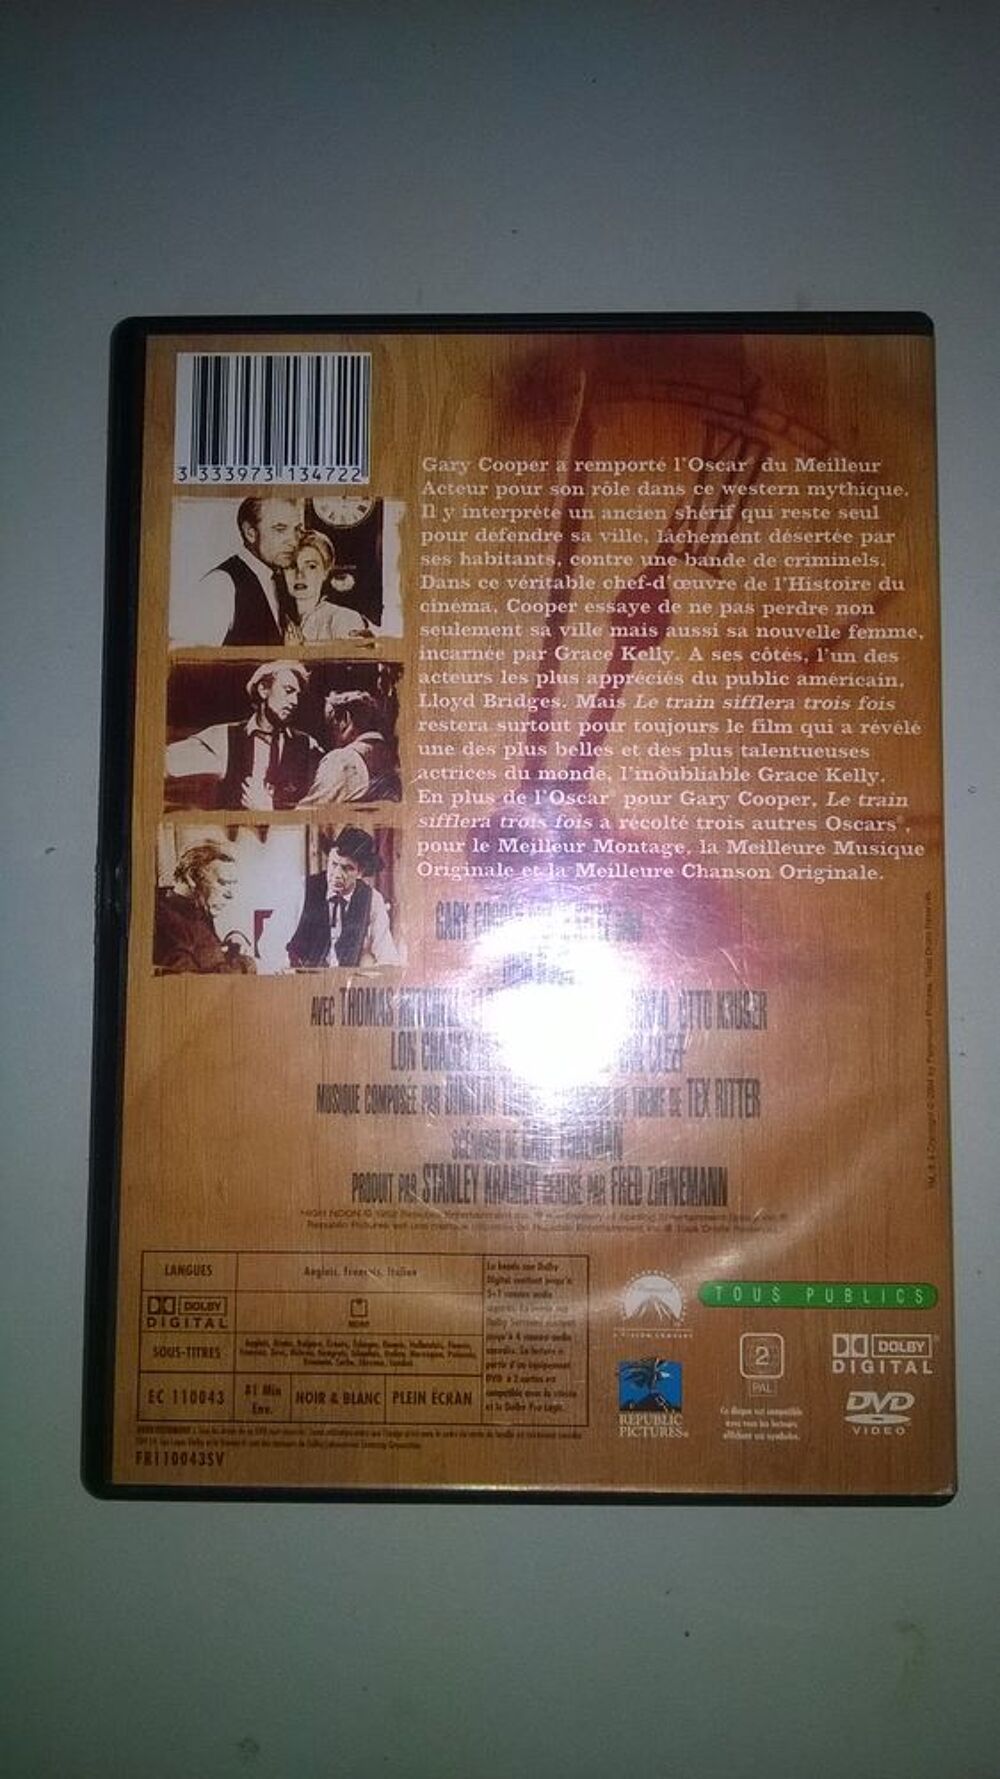 DVD Le train sifflera trois fois
Gary Cooper Grace Kelly DVD et blu-ray